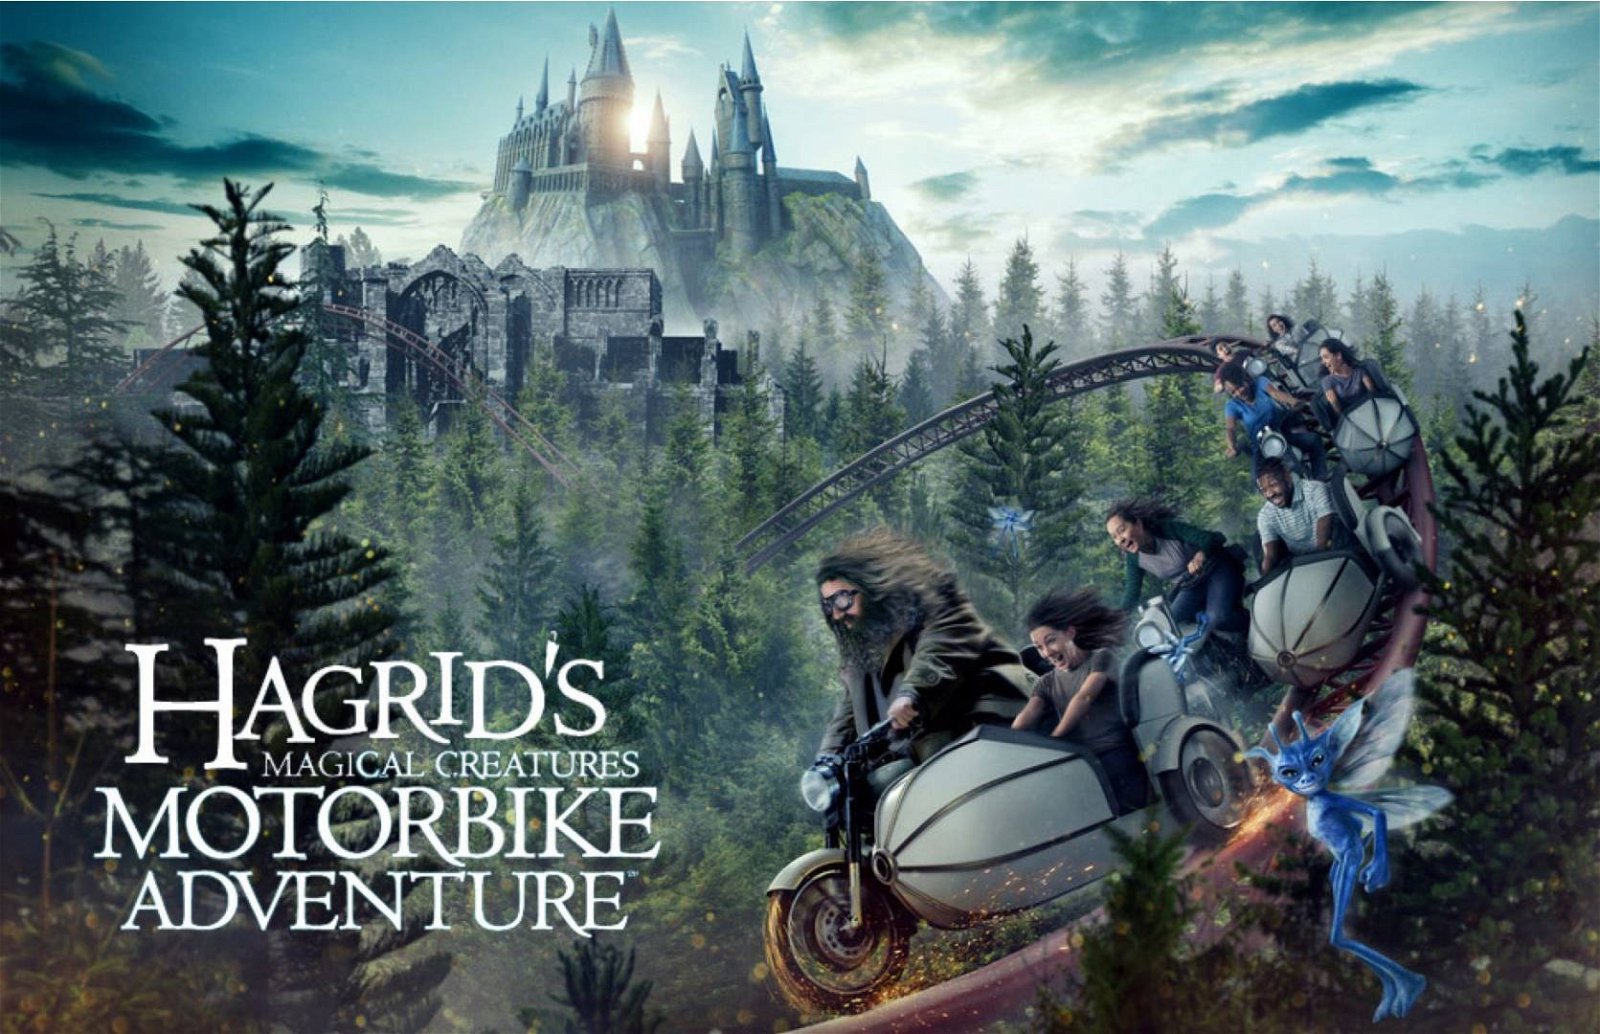 Immagine di Harry Potter: Hagrid's magical creatures motorbike adventure